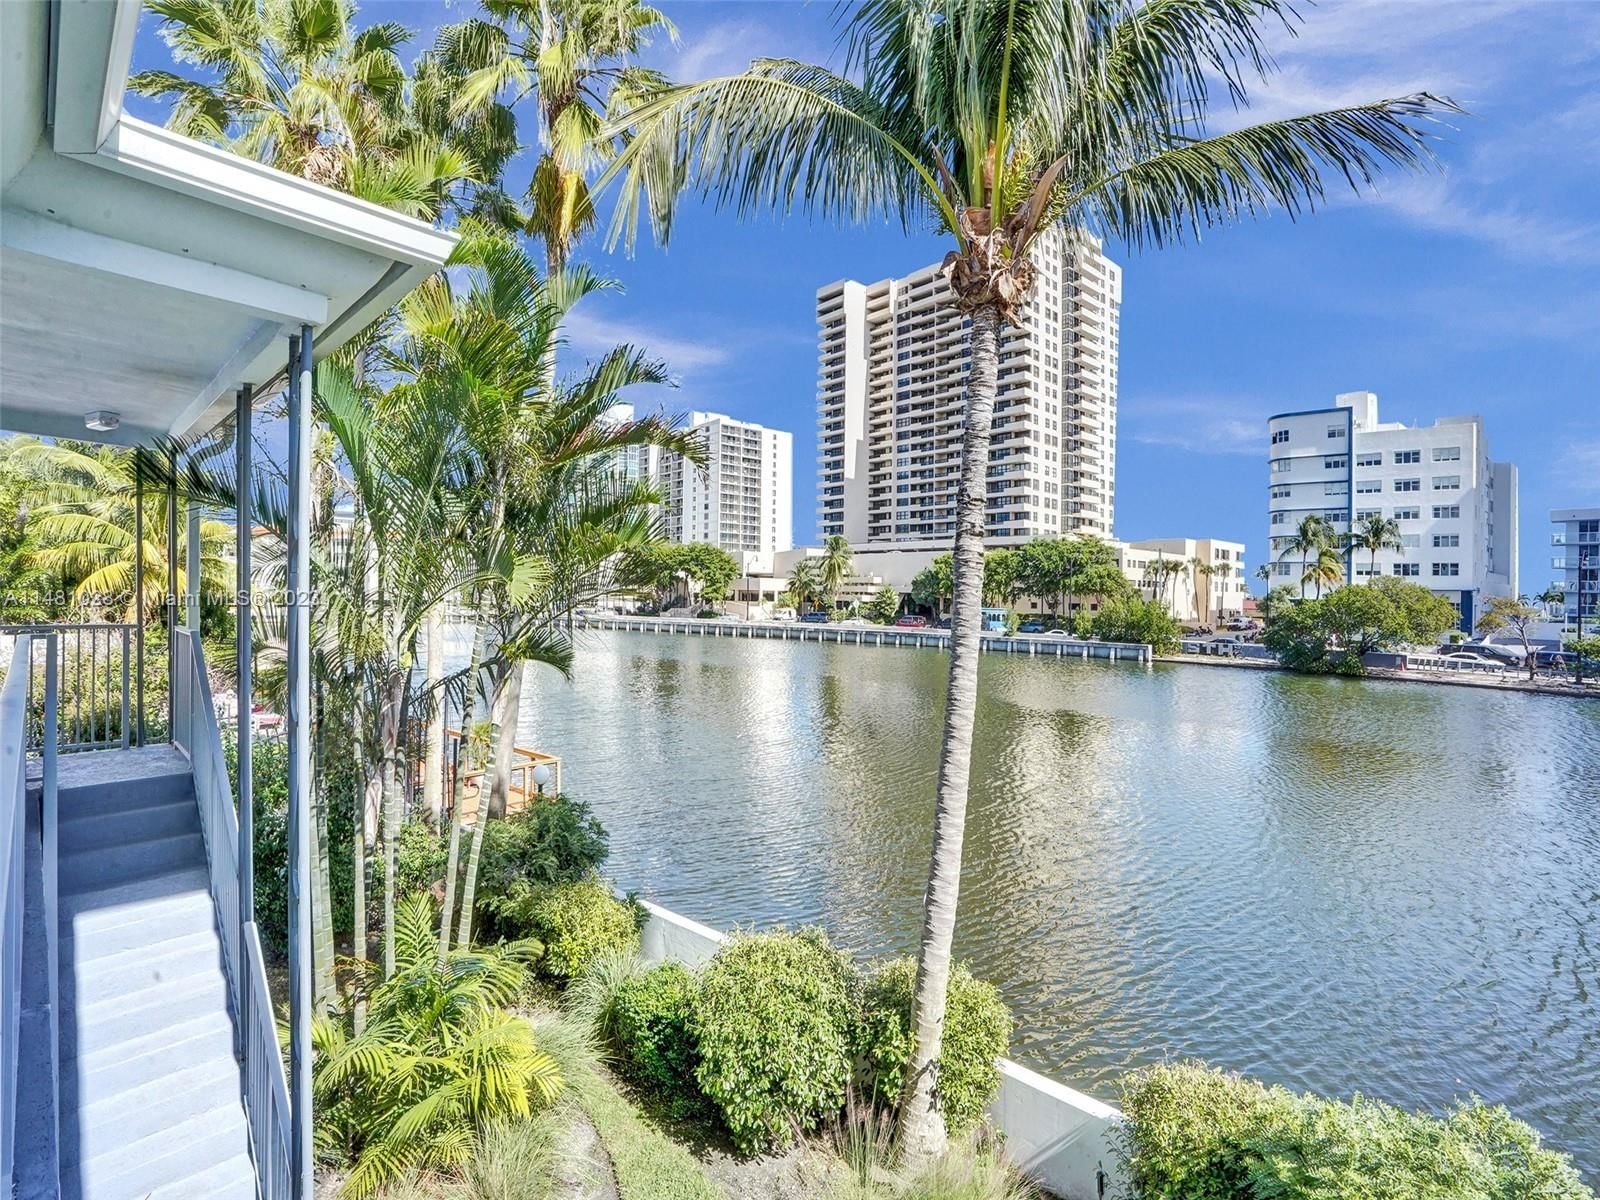 Real estate property located at 2445 Lake Pancoast Dr P, Miami-Dade County, HELEN MAR CONDO, Miami Beach, FL